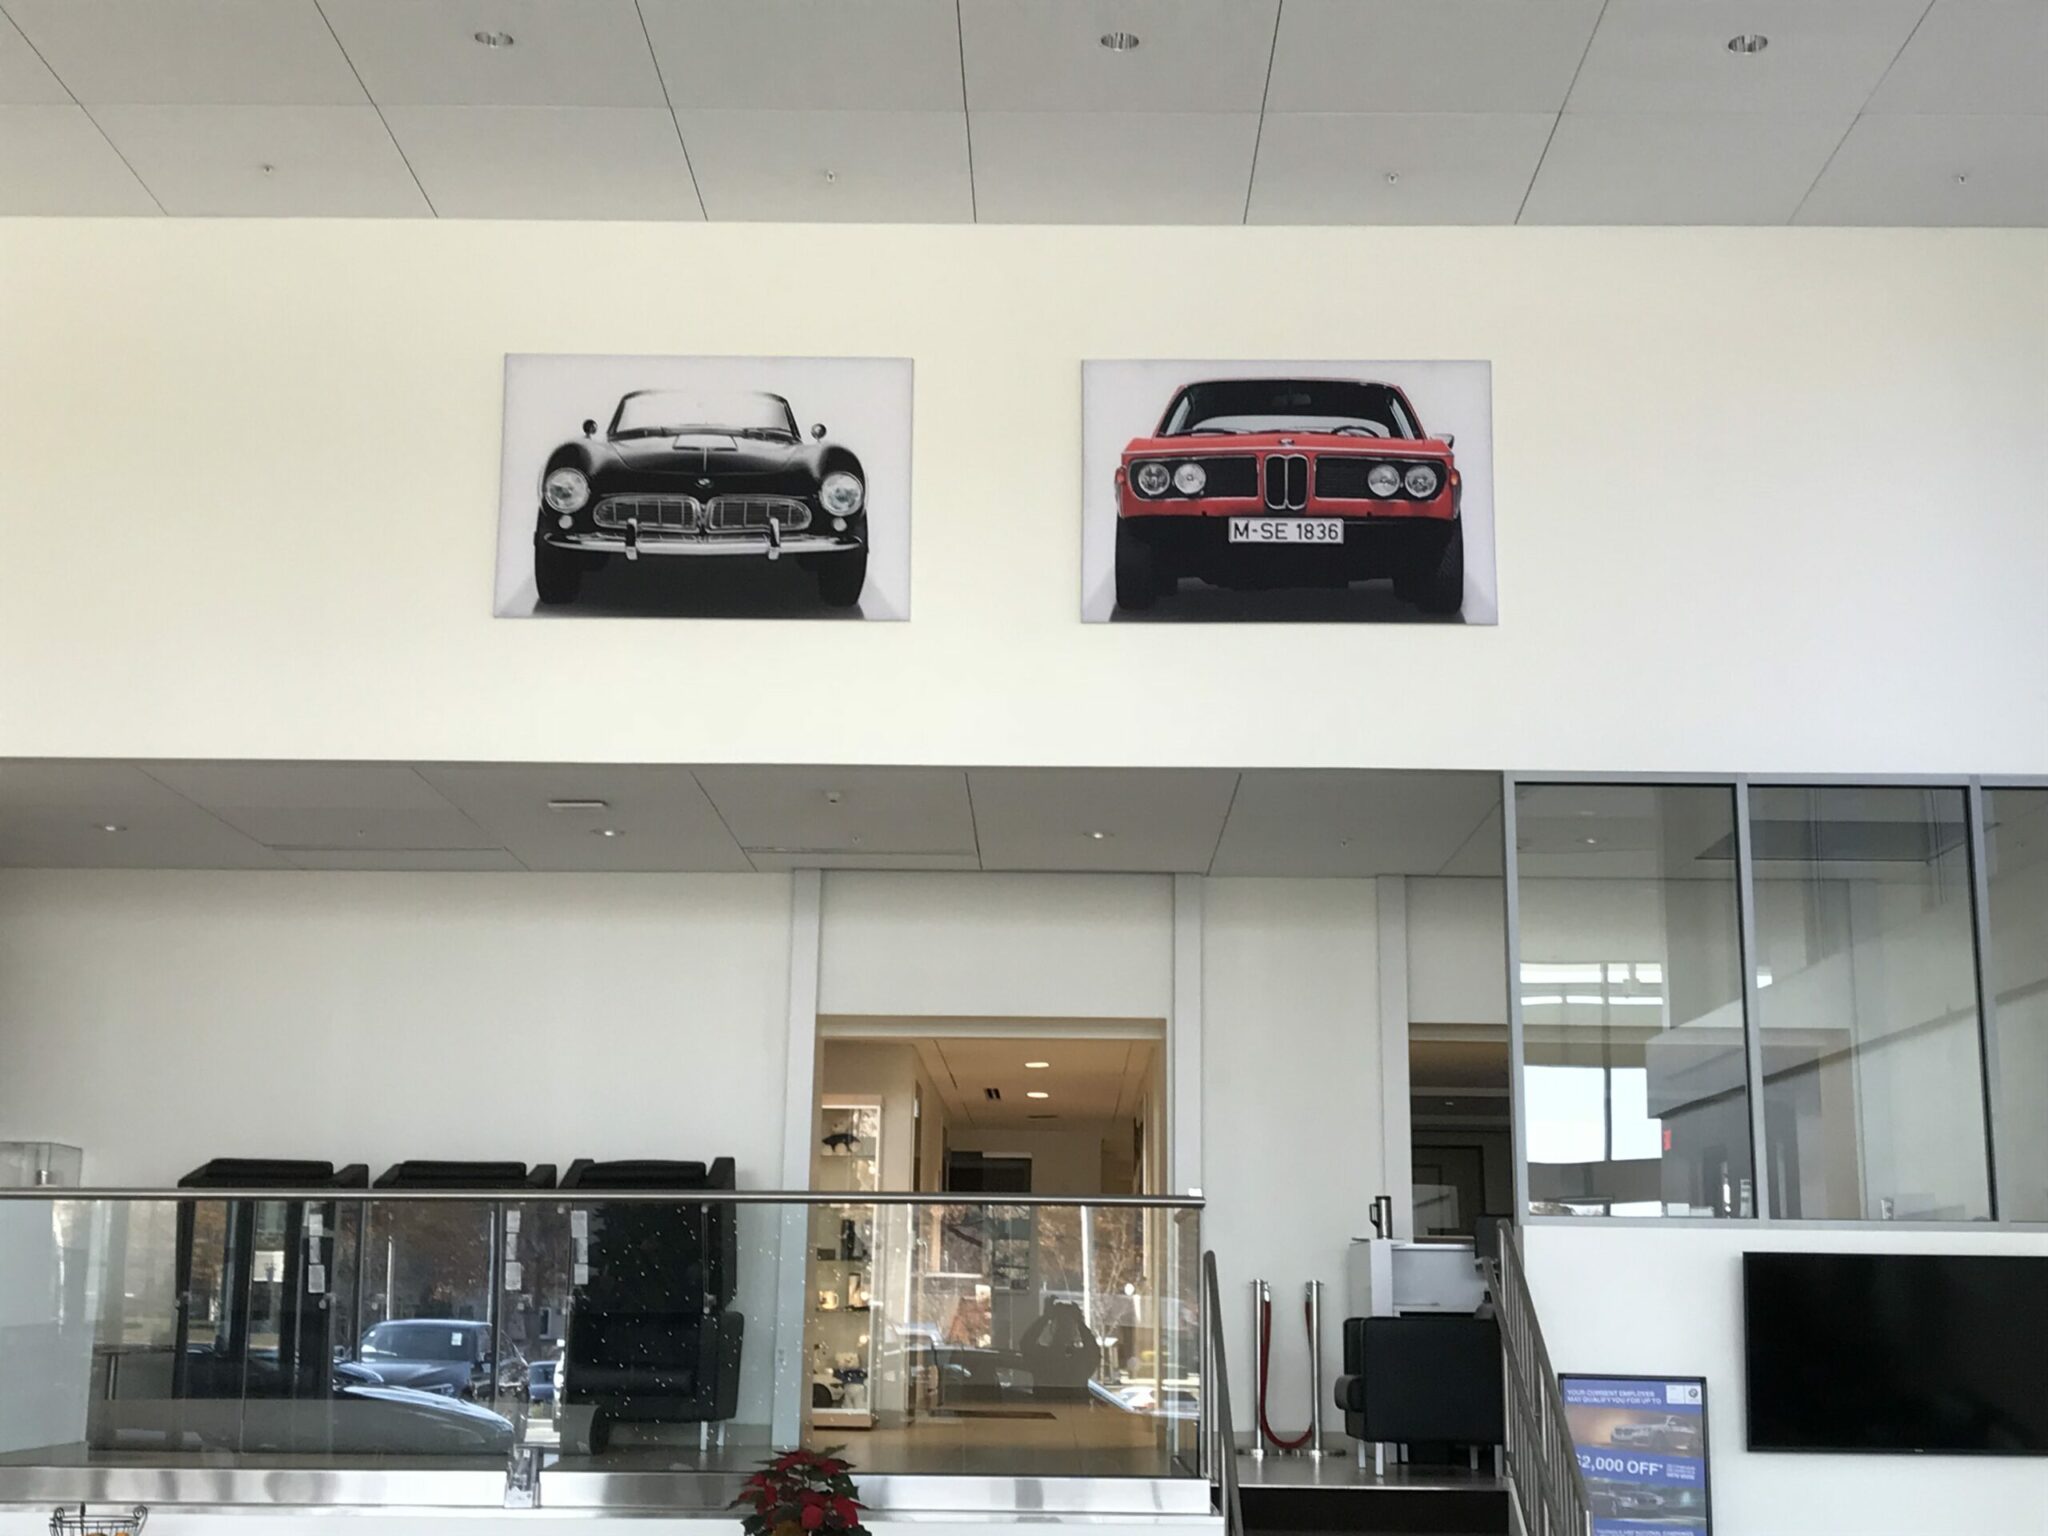 2 cars printed images